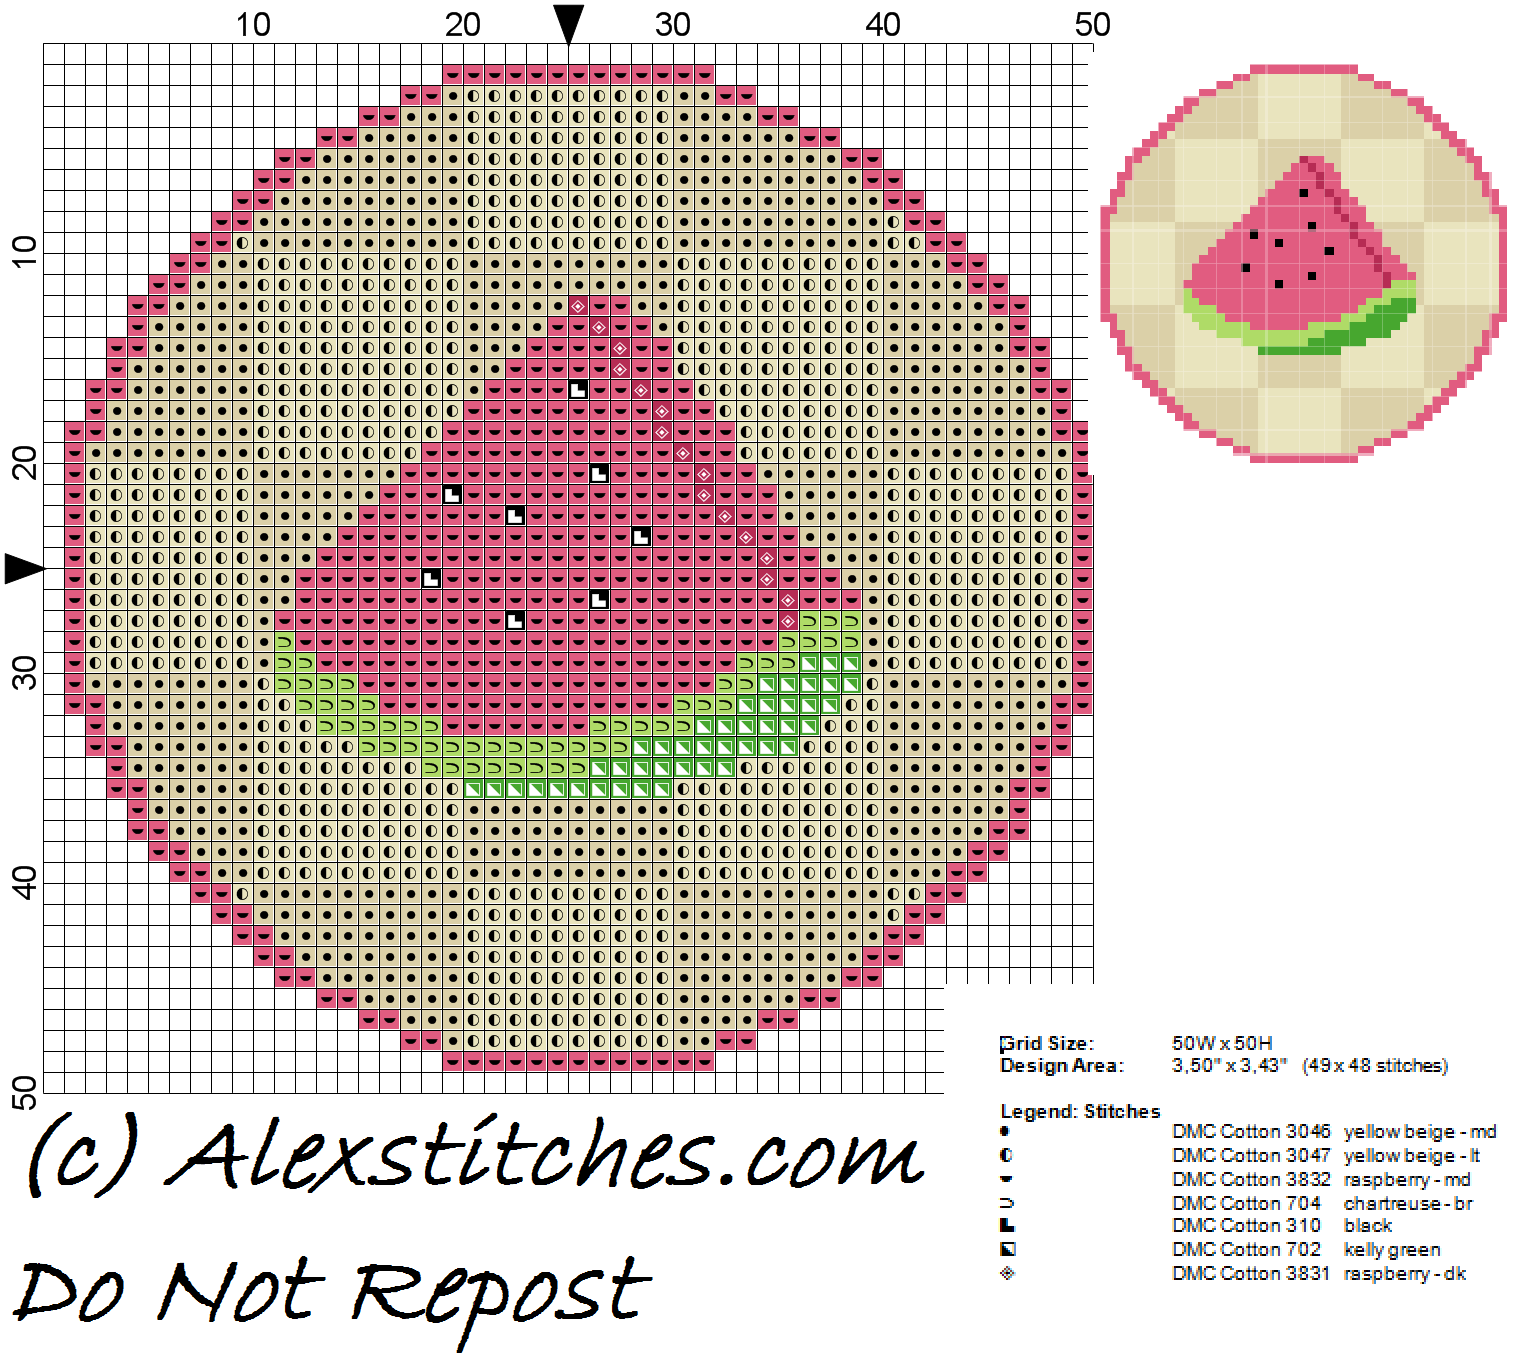 Watermelon Jar Cover free cross stitch pattern